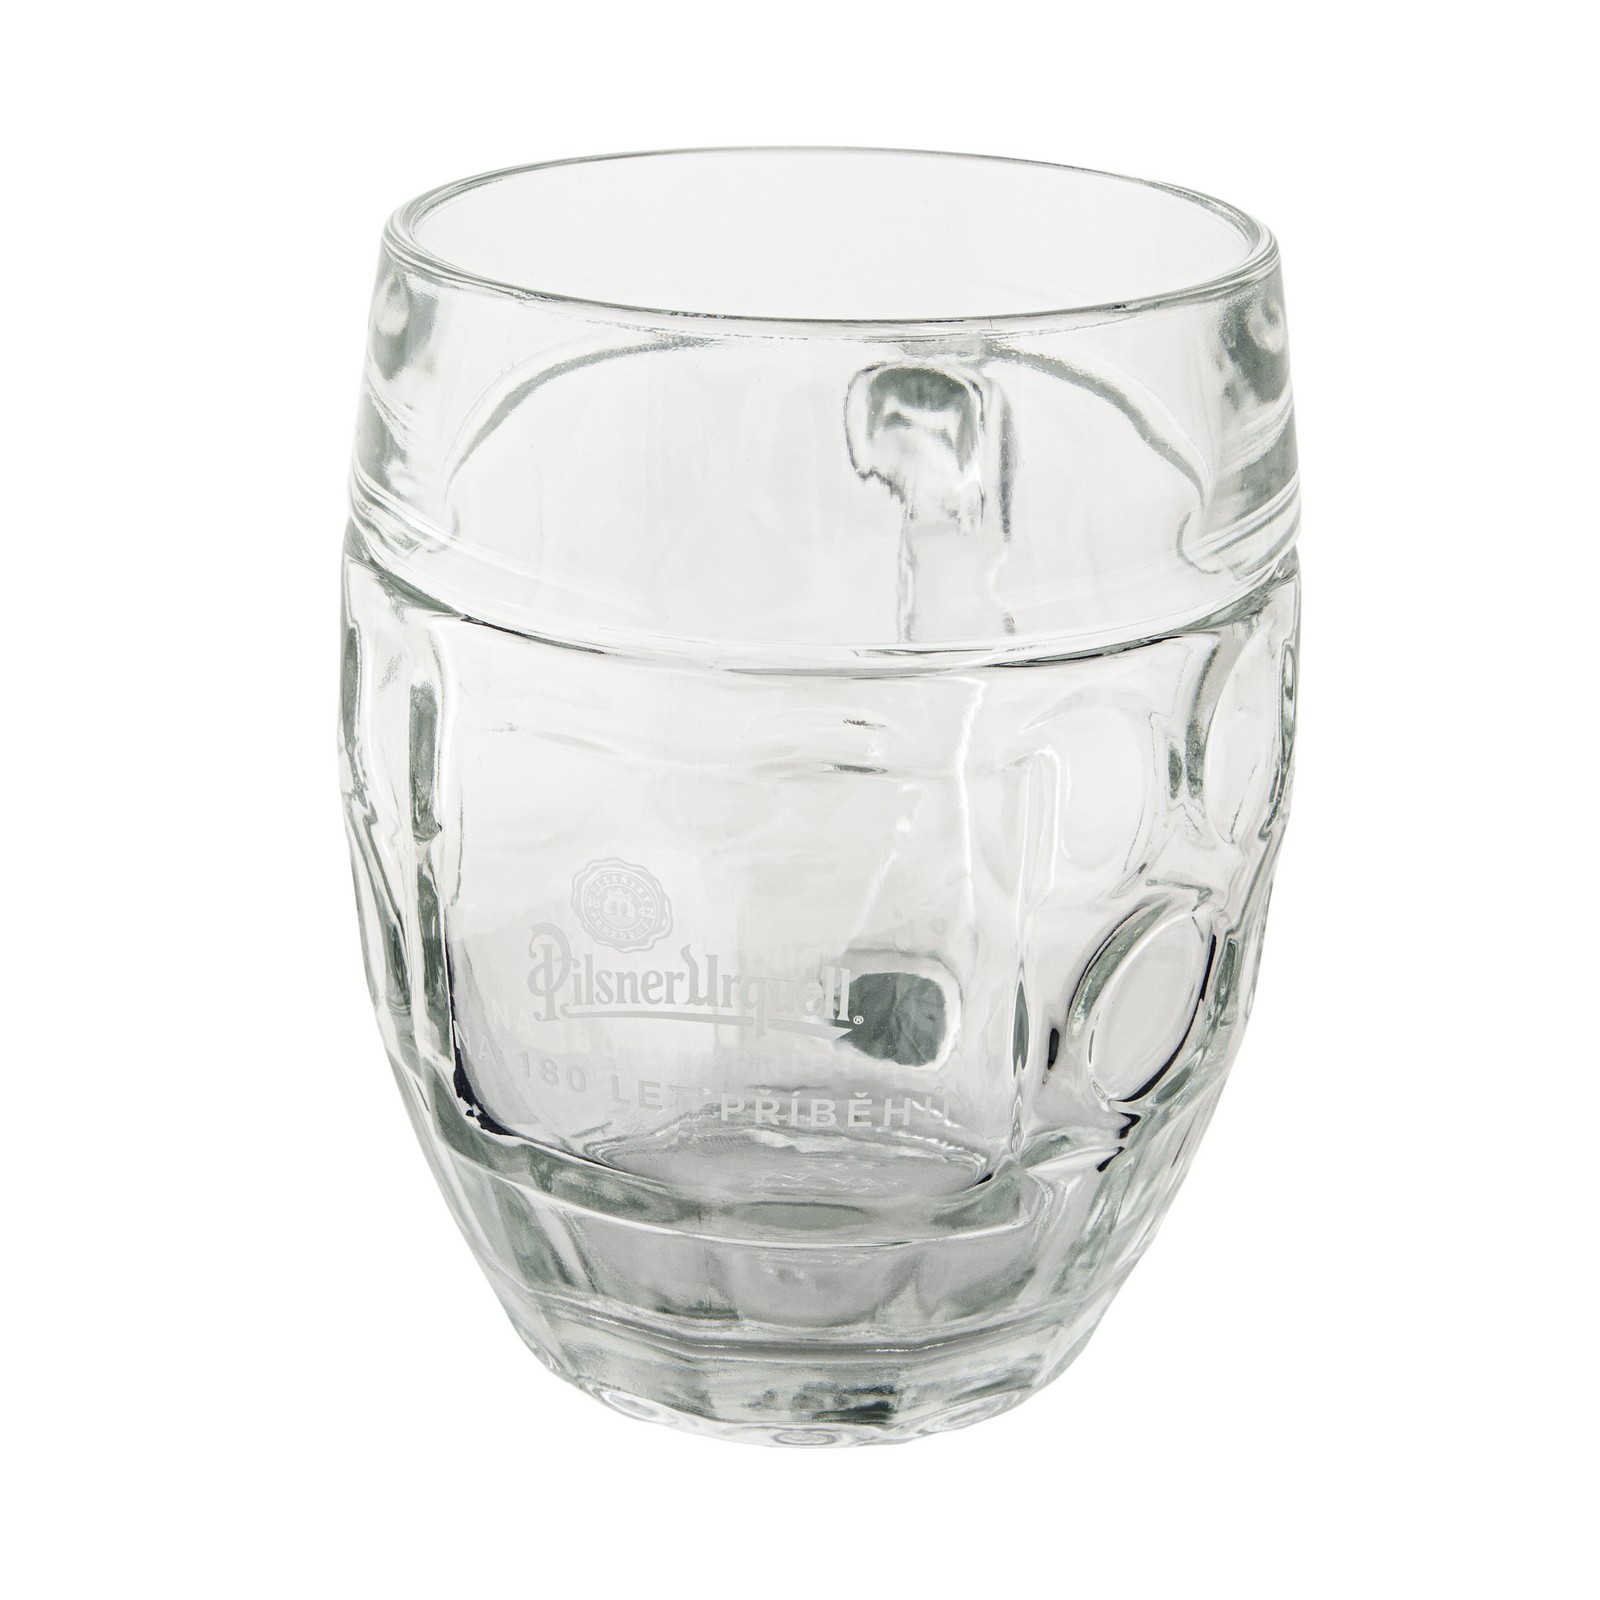 Pilsner Urquell 0.3 l glass - 180 year edition